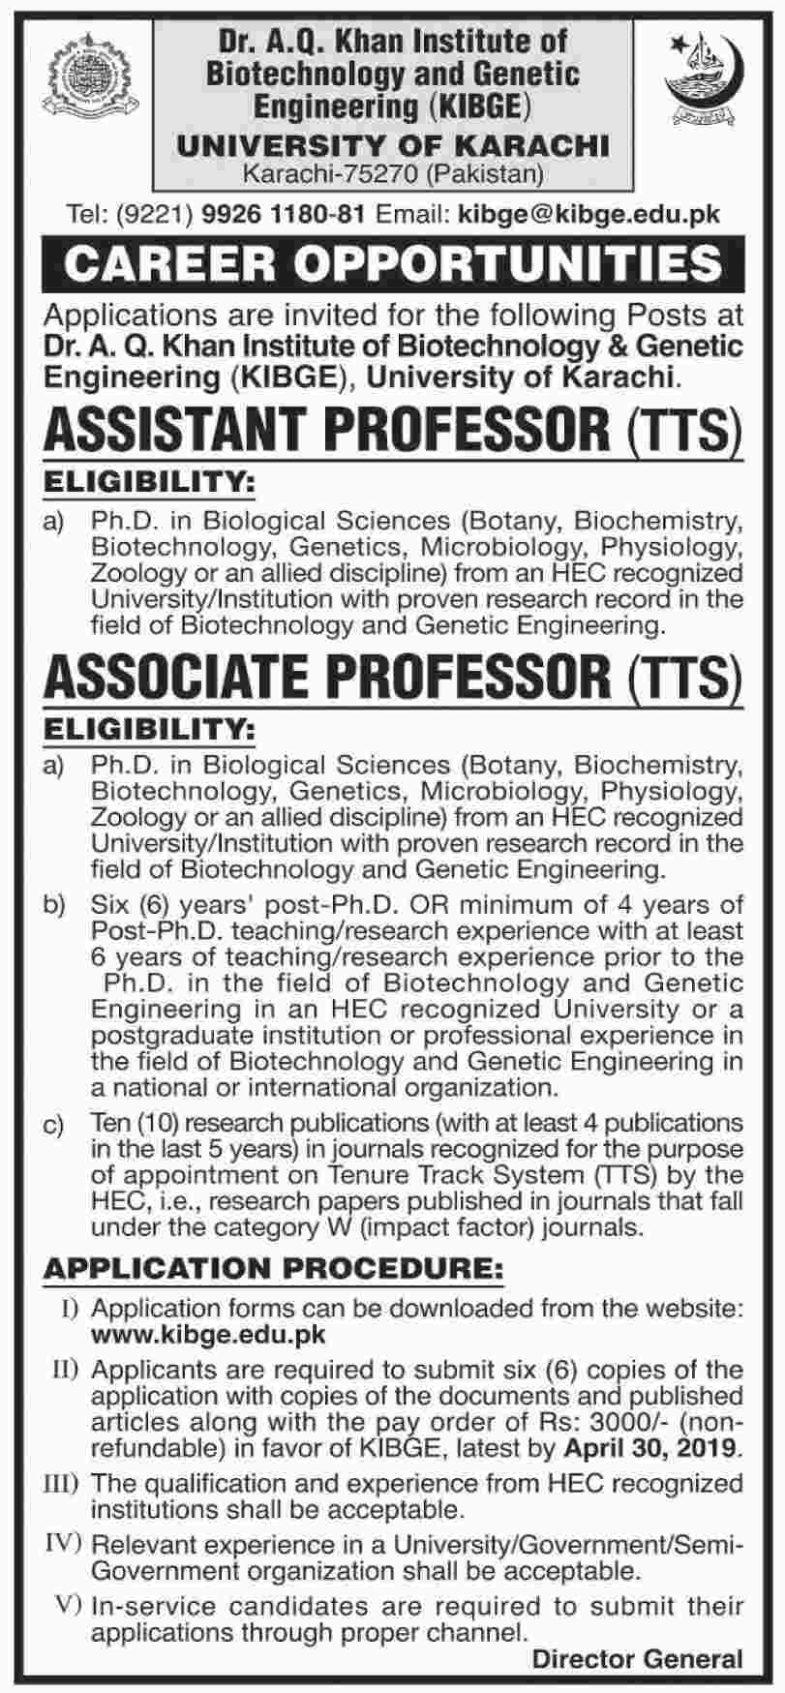 University of Karachi Jobs 2019 for Teaching Faculty at Dr AQ Khan Institute / KIBGE